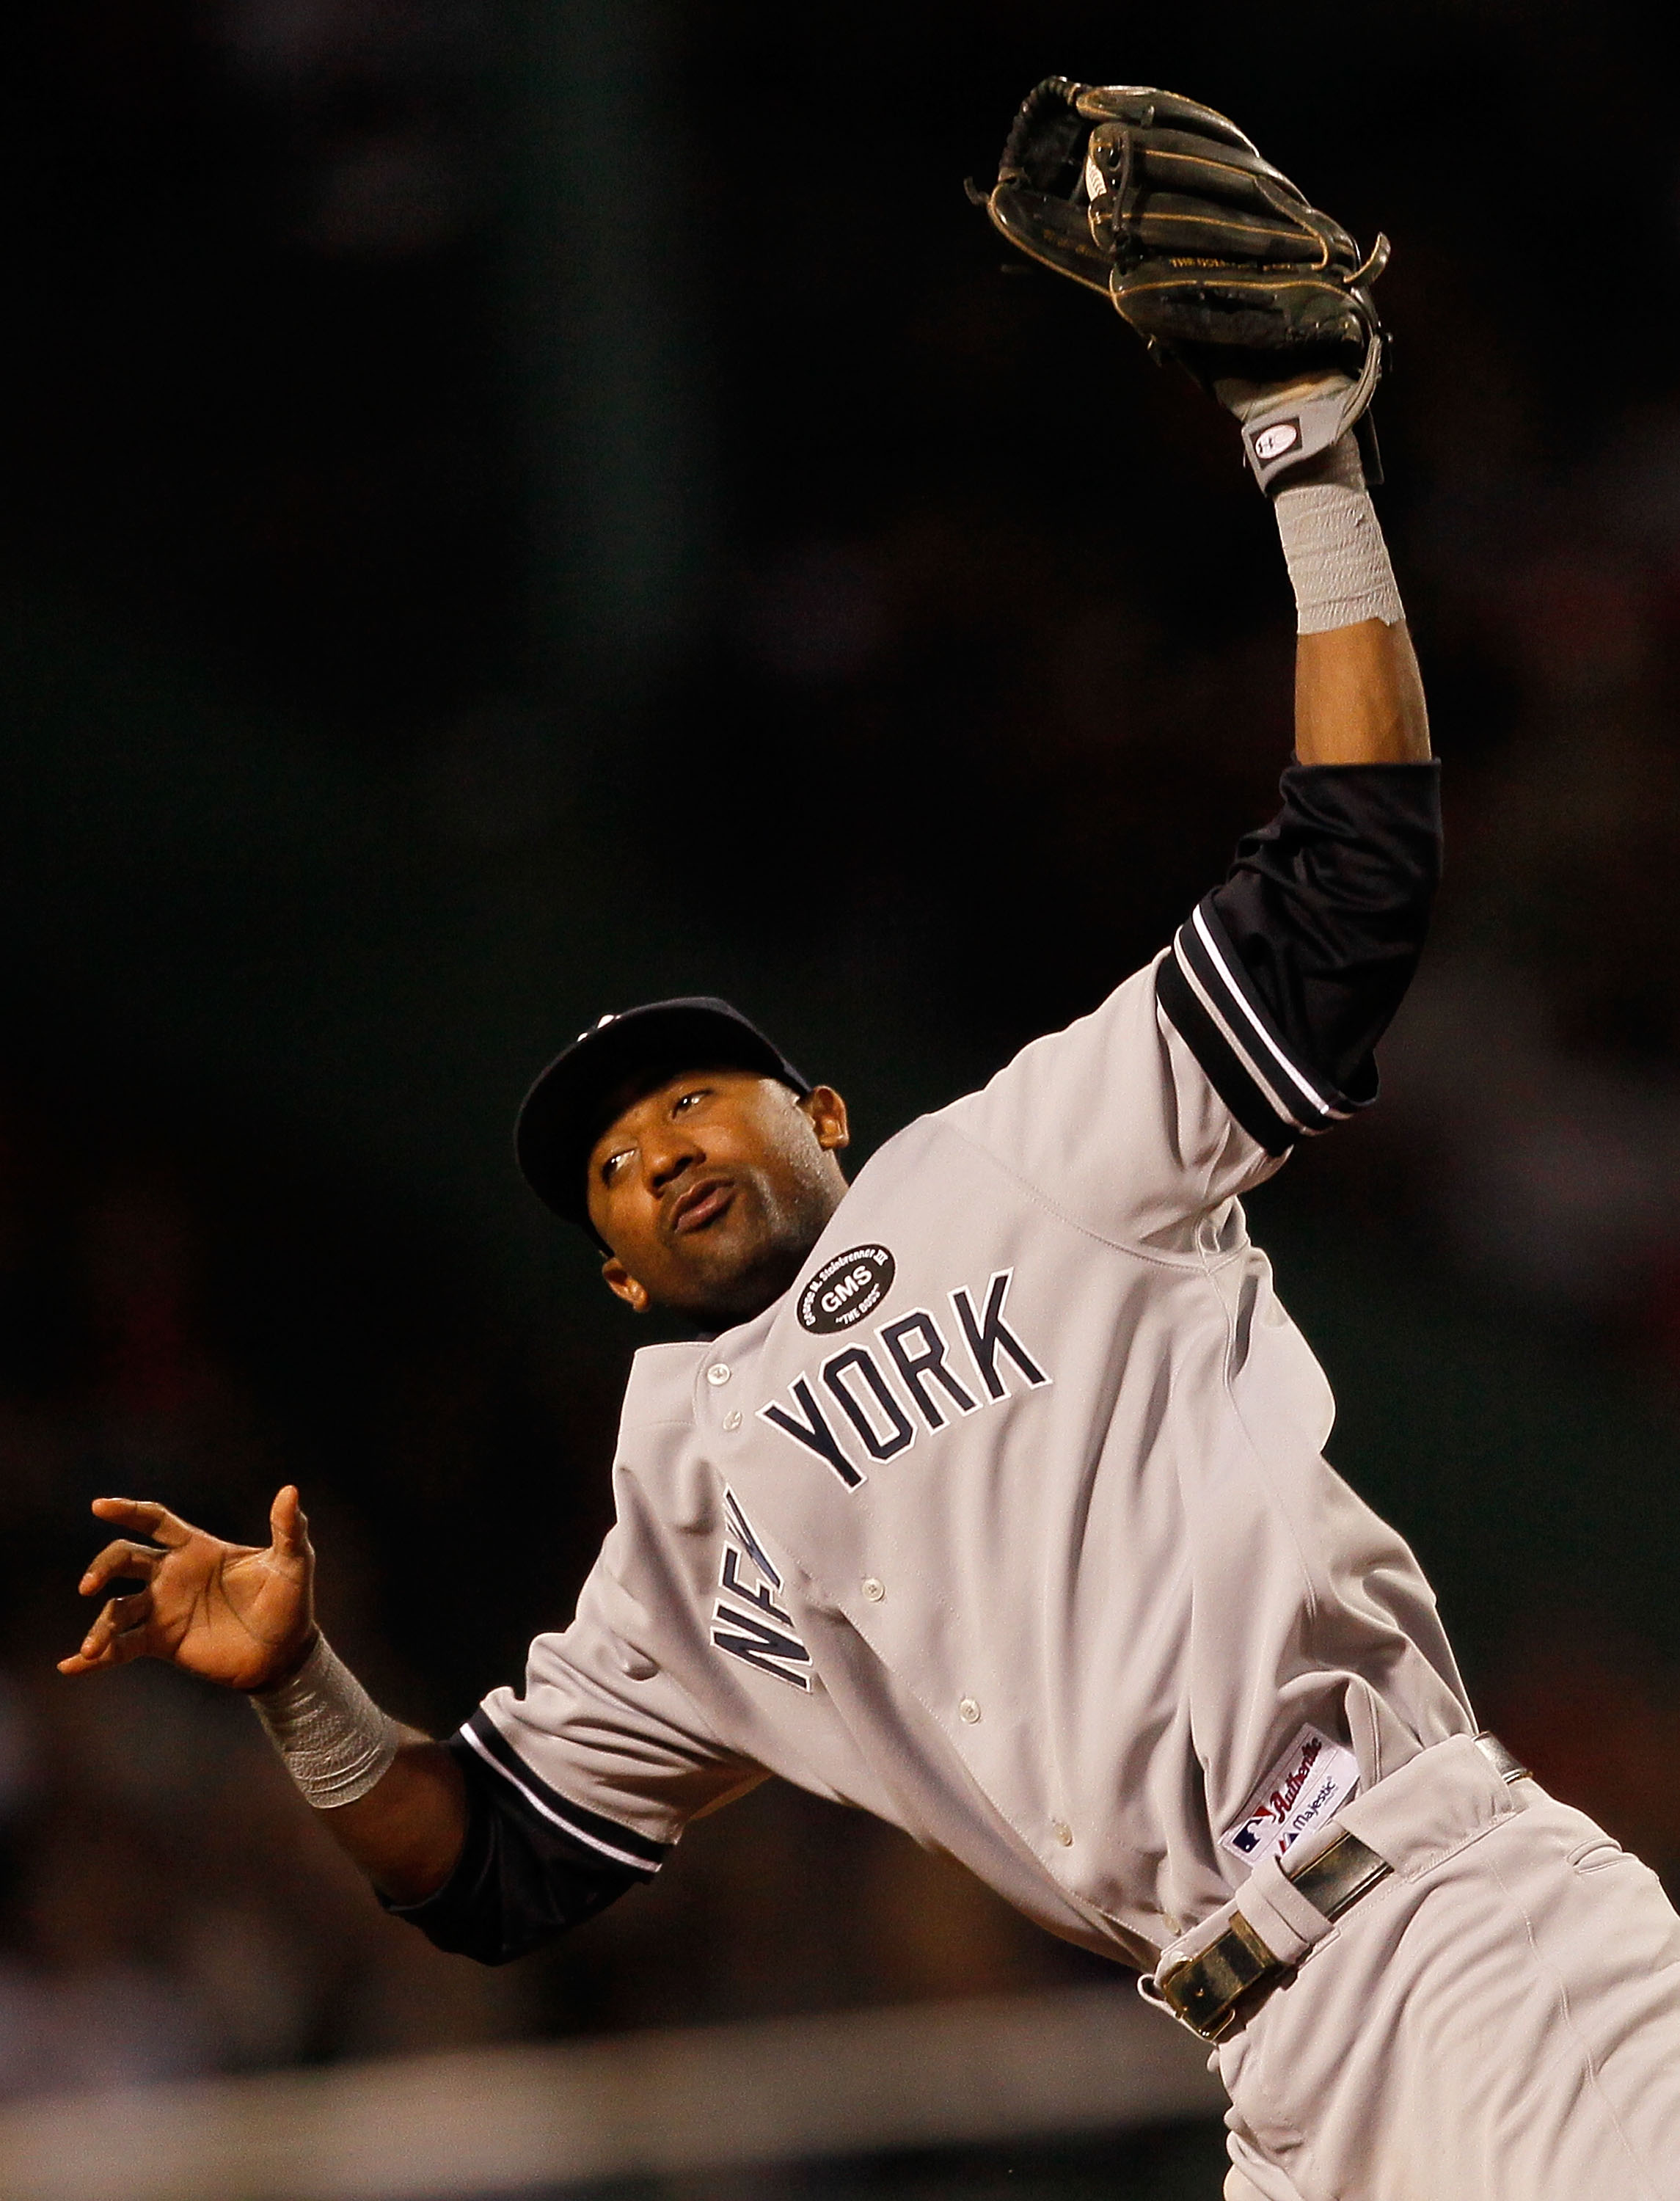 New York Yankees 2009 World Series Derek Jeter #2 Majestic